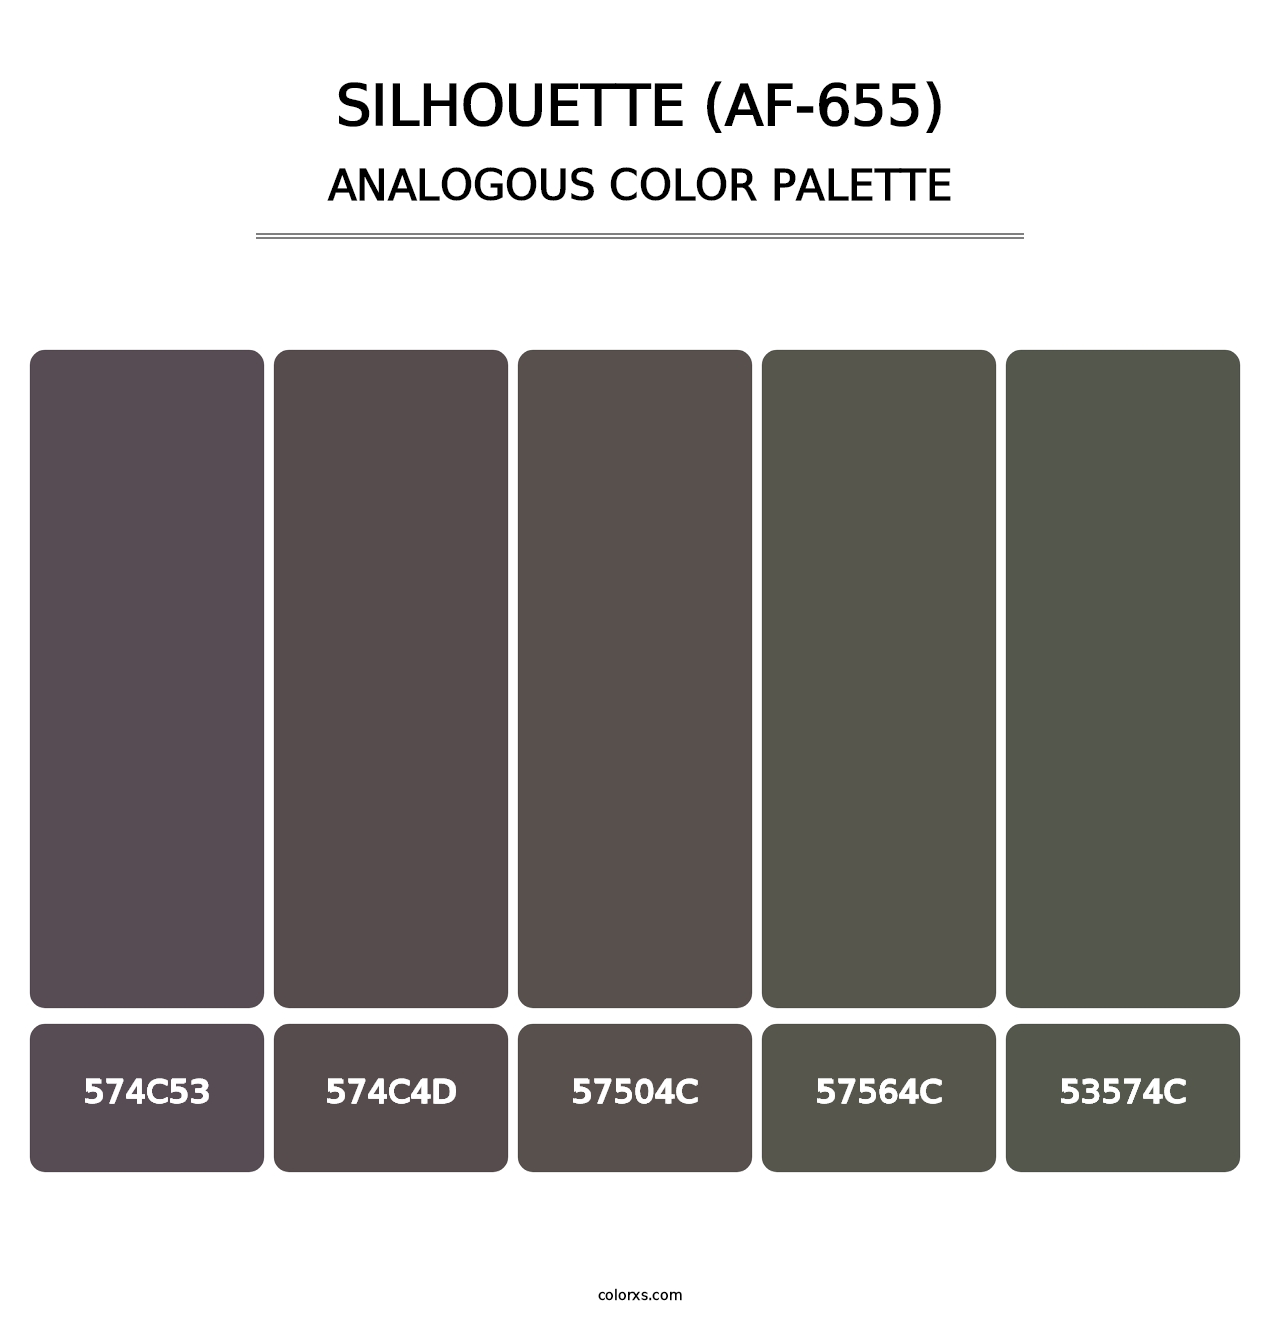 Silhouette (AF-655) - Analogous Color Palette